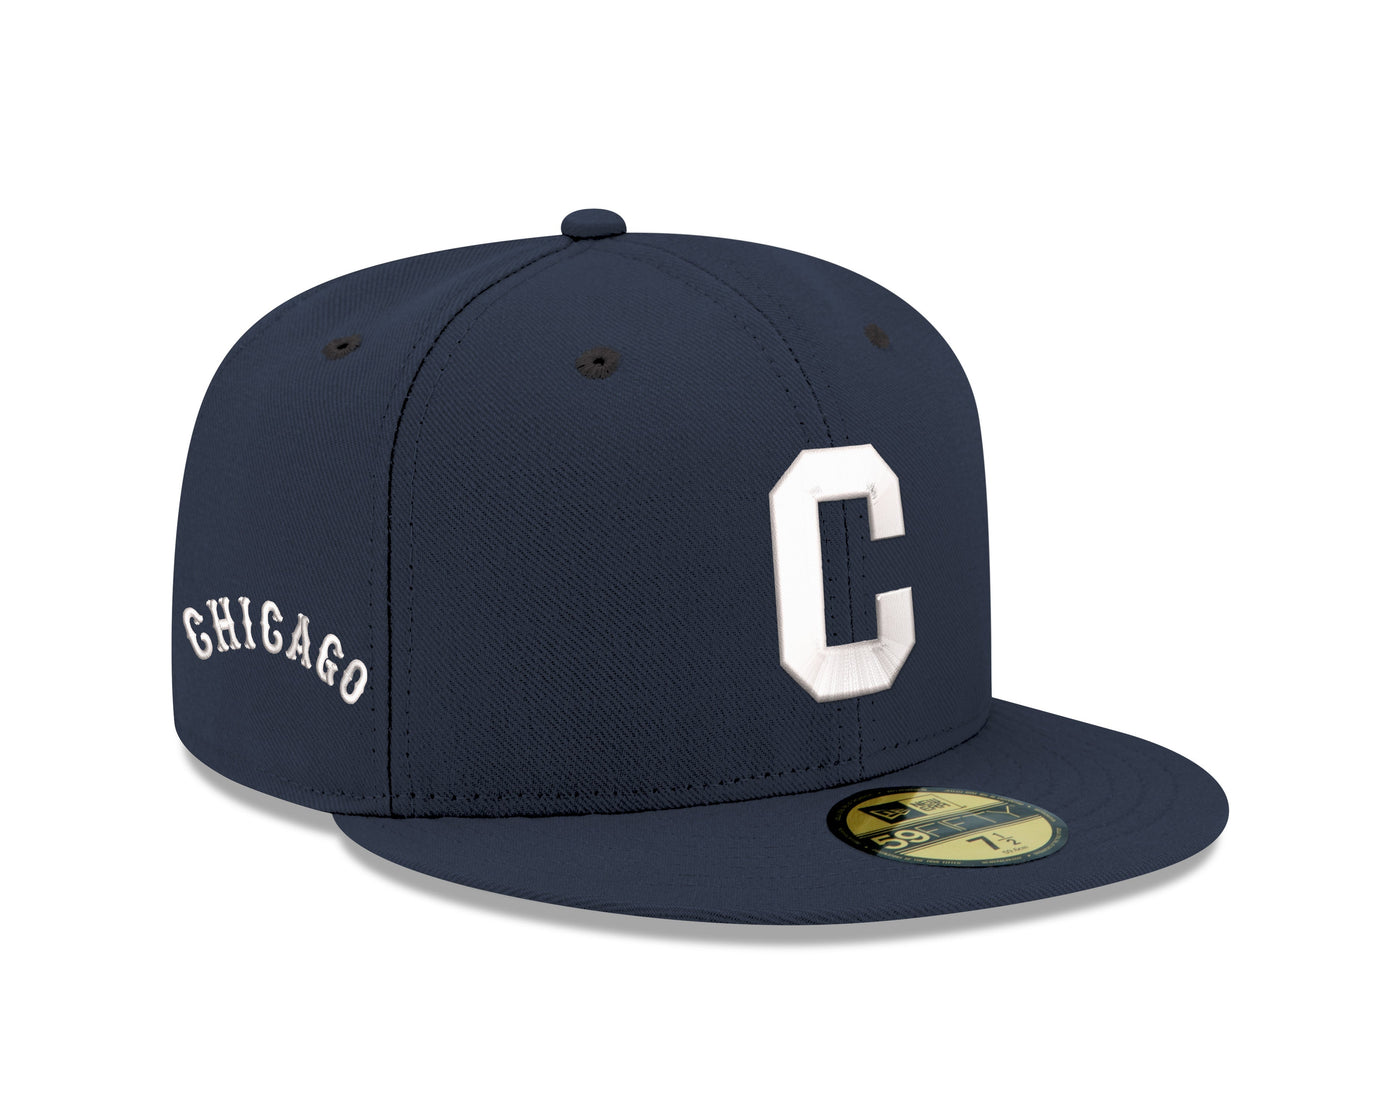 CHICAGO CUBS NEW ERA 1926 LOGO 59FIFTY CAP